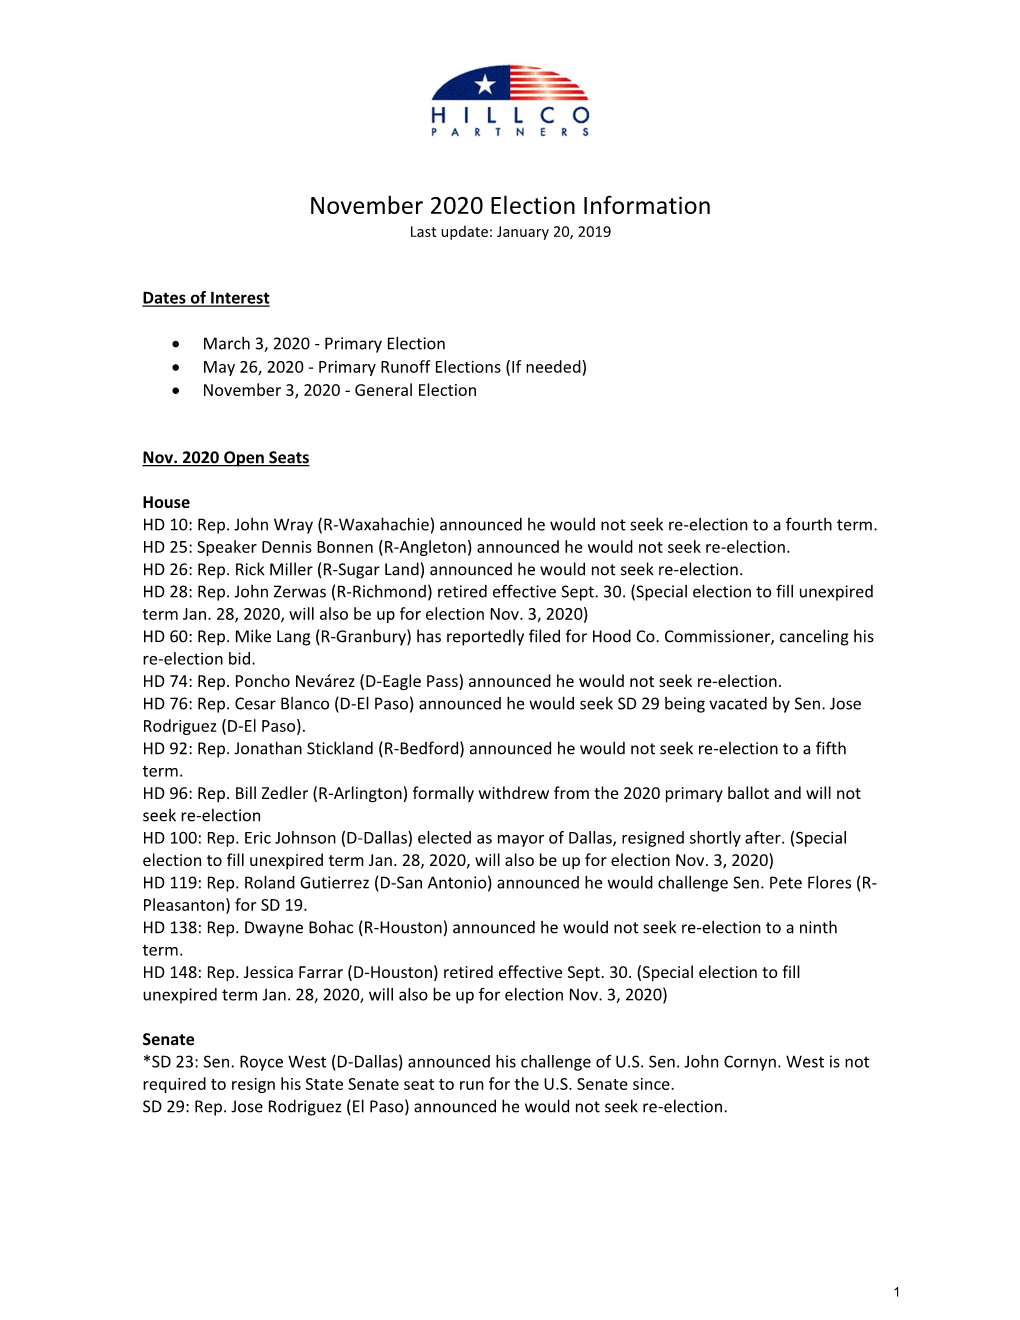 November 2020 Election Information Last Update: January 20, 2019